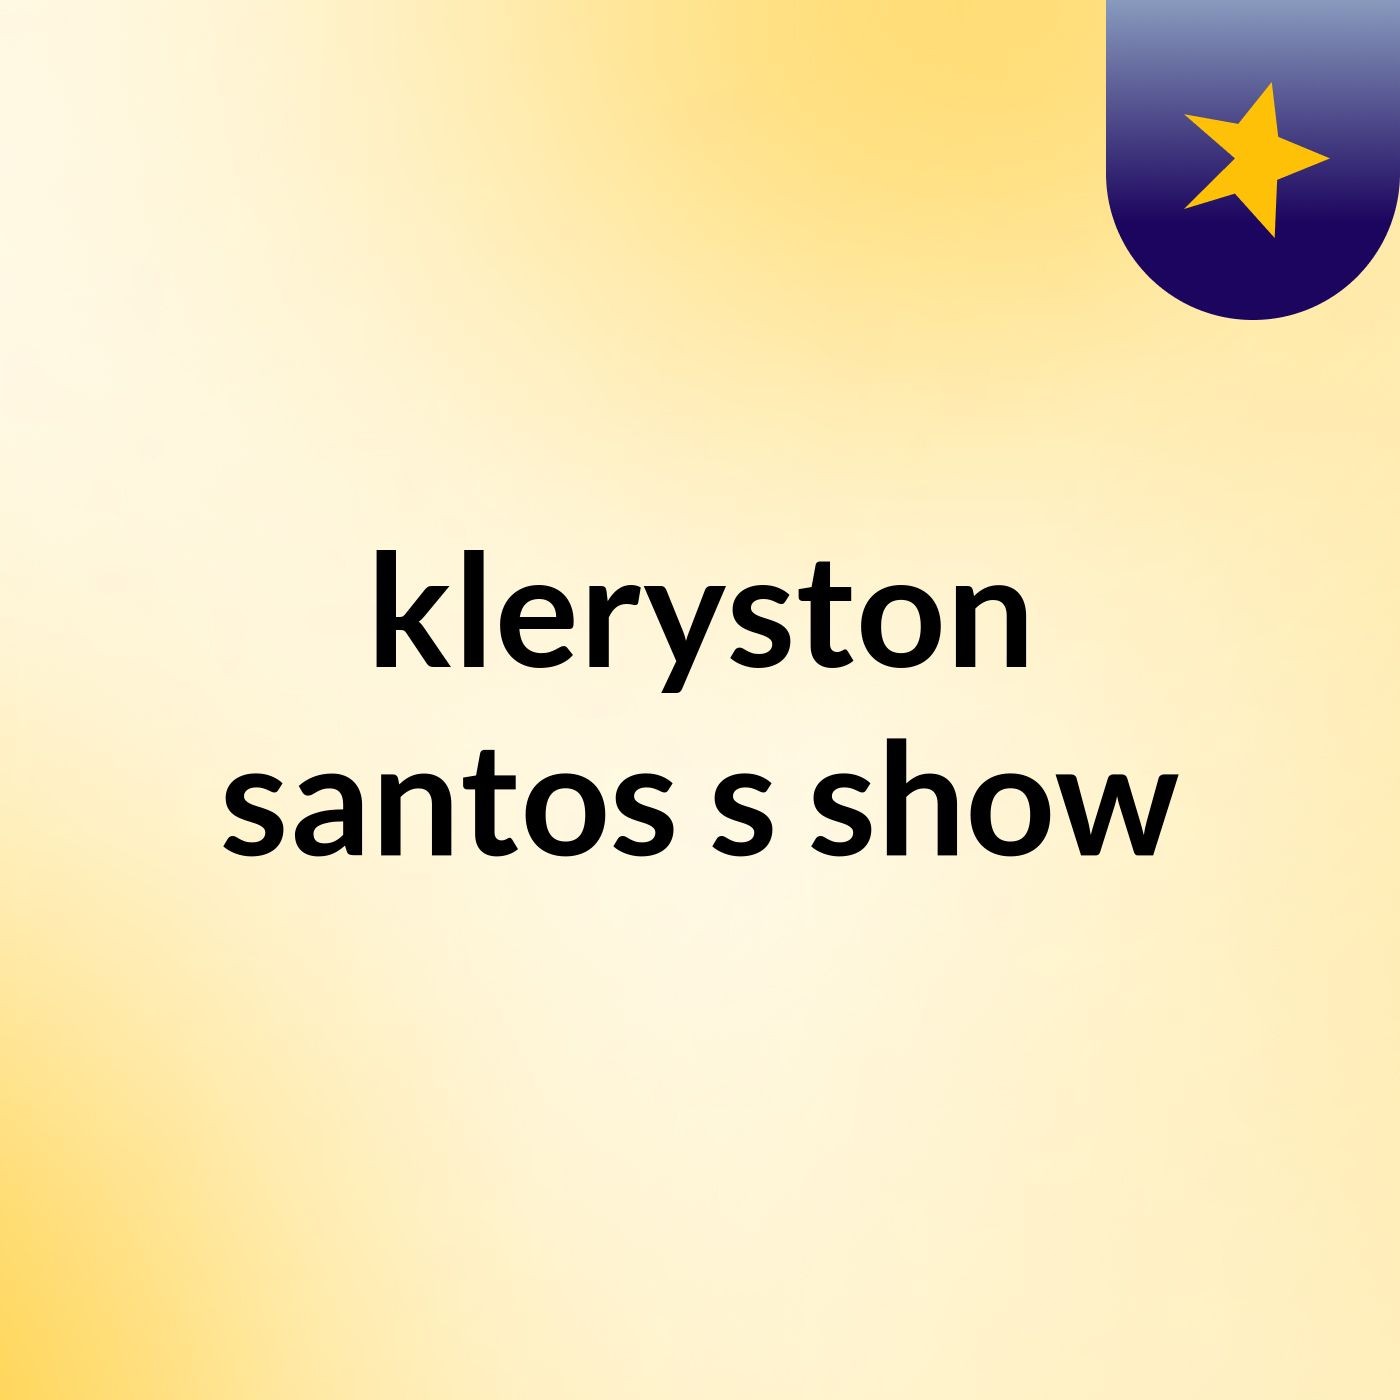 kleryston santos's show